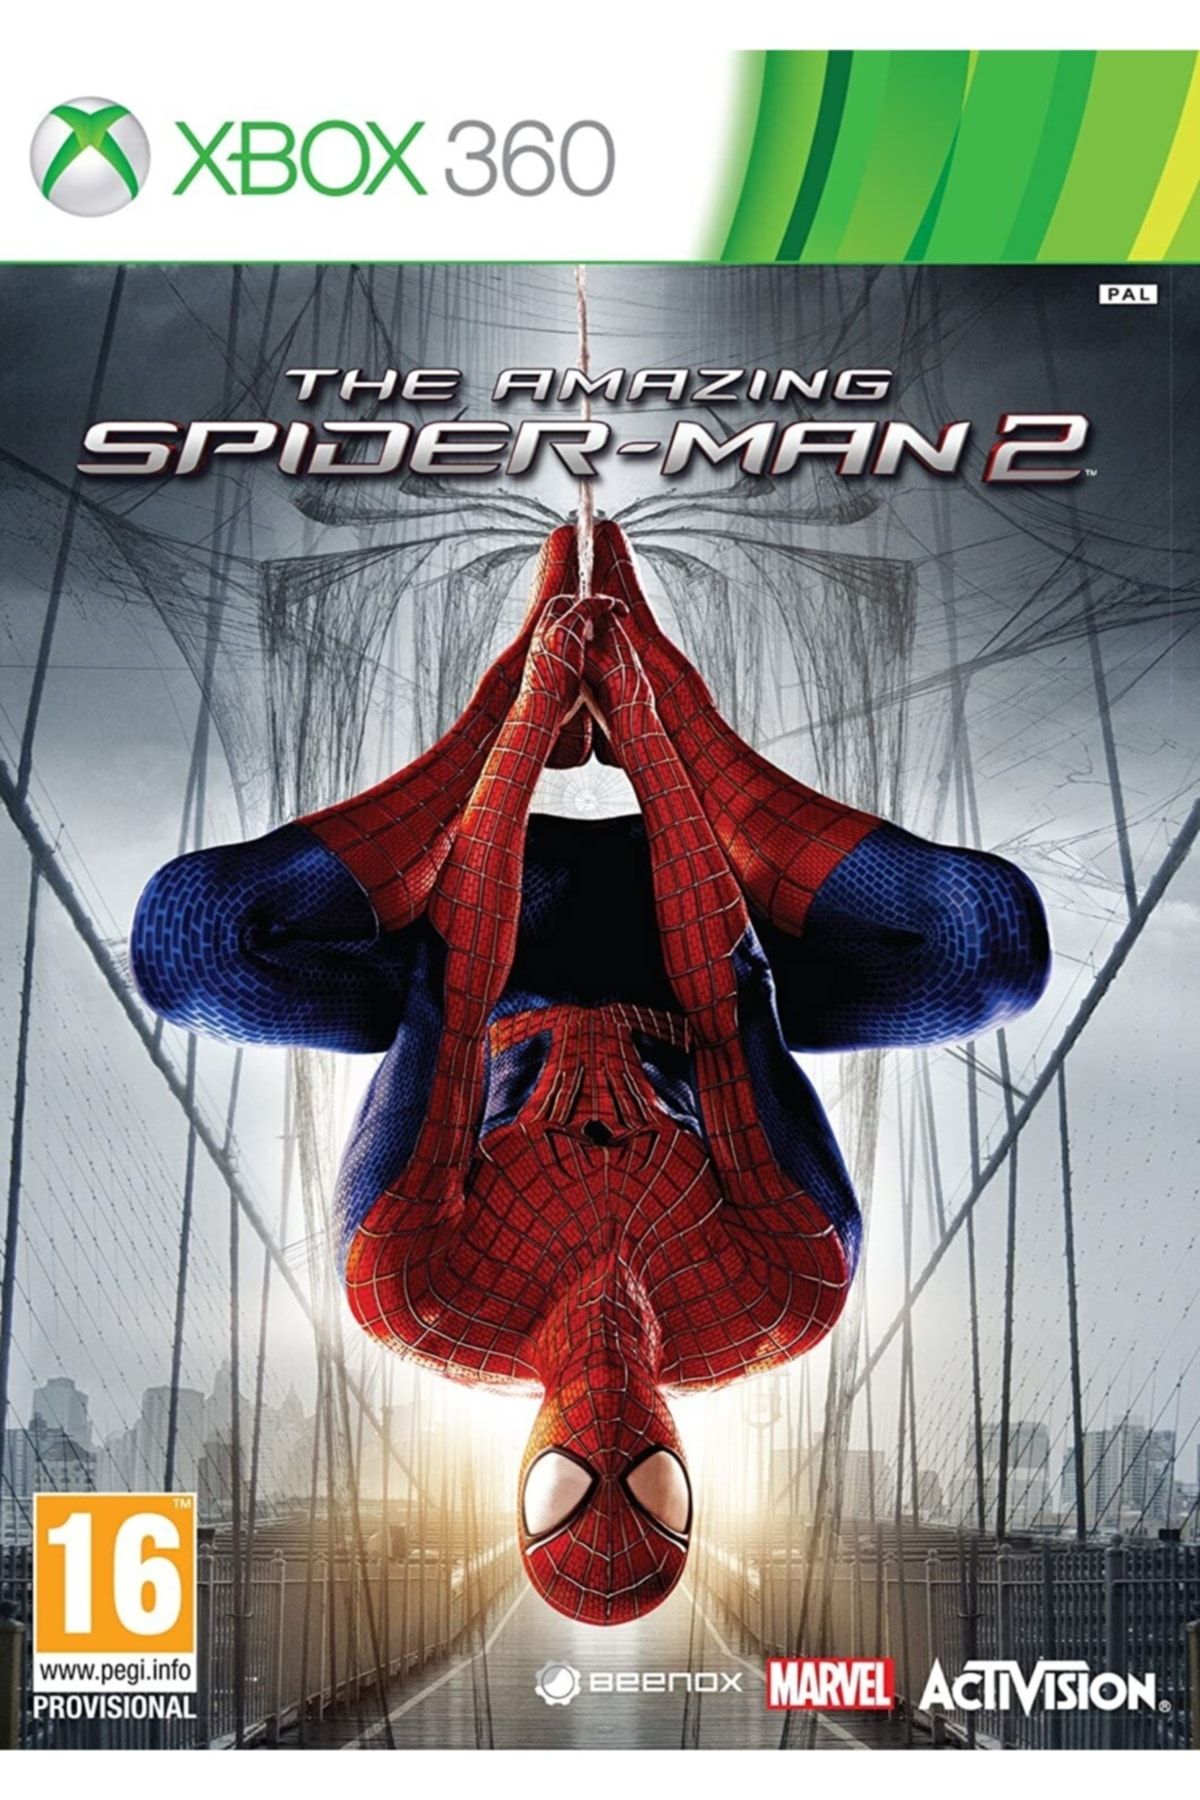 Genel Markalar The Amazing Spiderman 2 Xbox 360 Oyun Teşhir Ürün